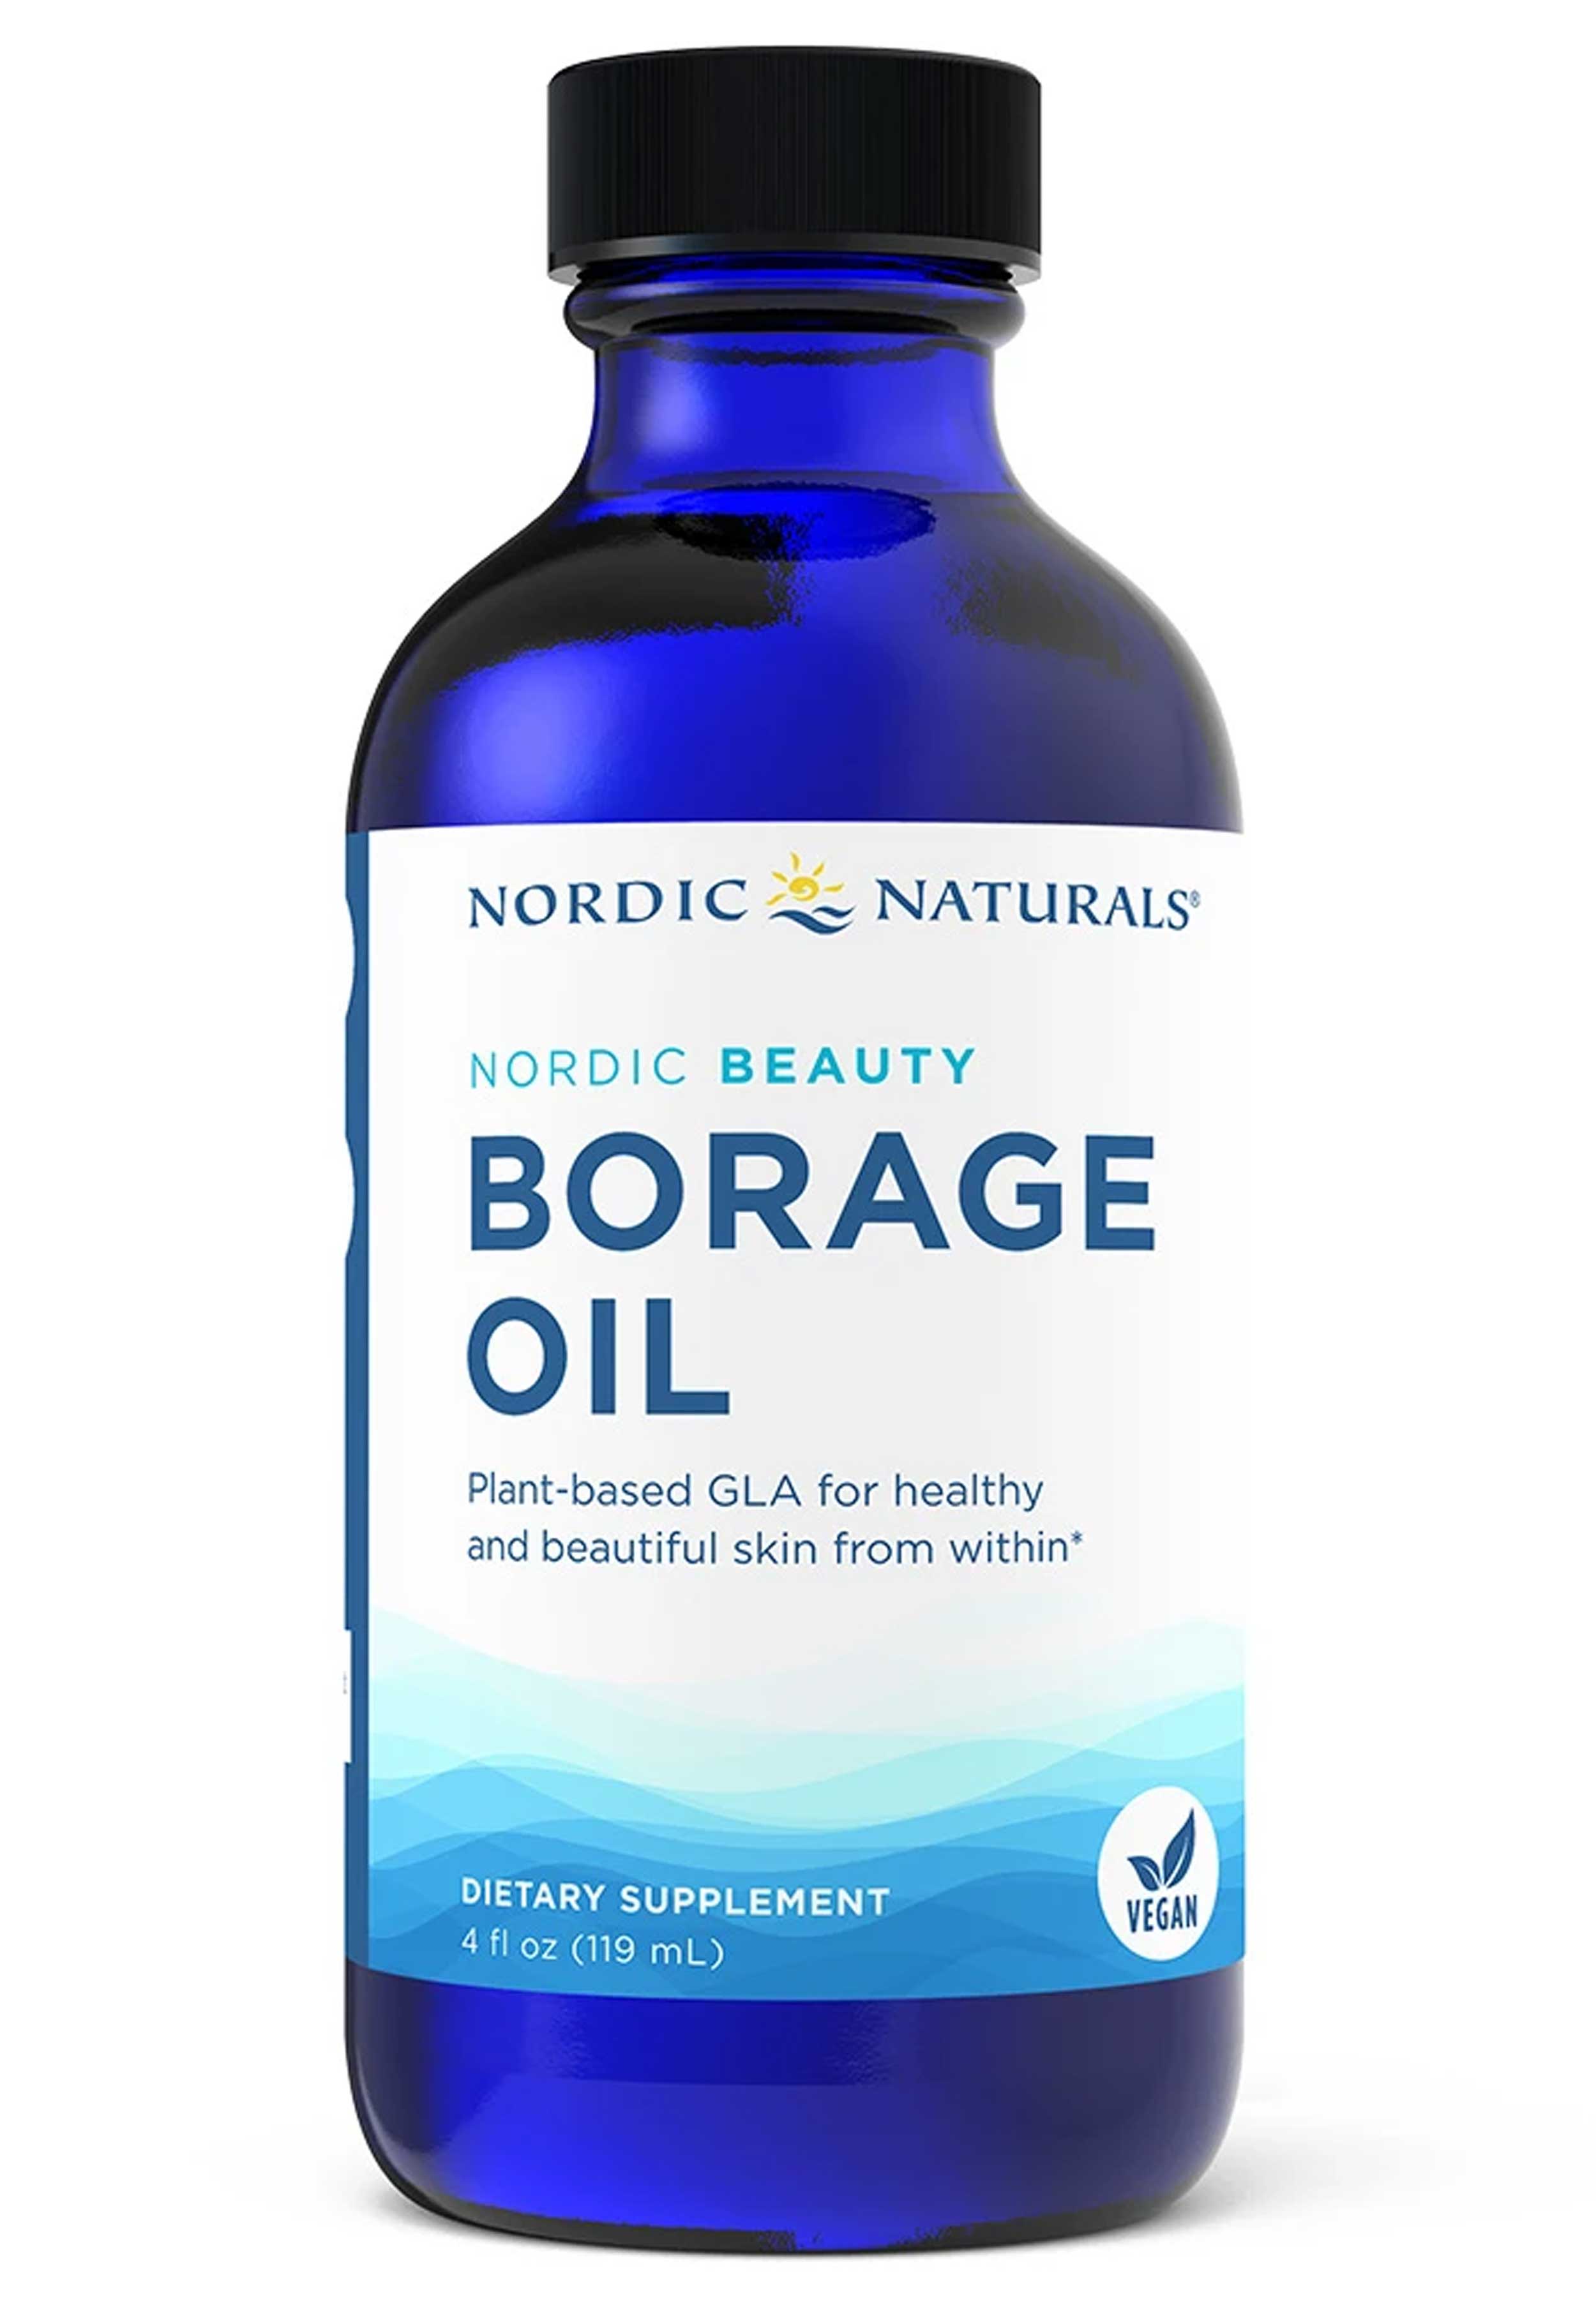 Nordic Naturals Nordic Beauty Borage Oil formerly Nordic GLA